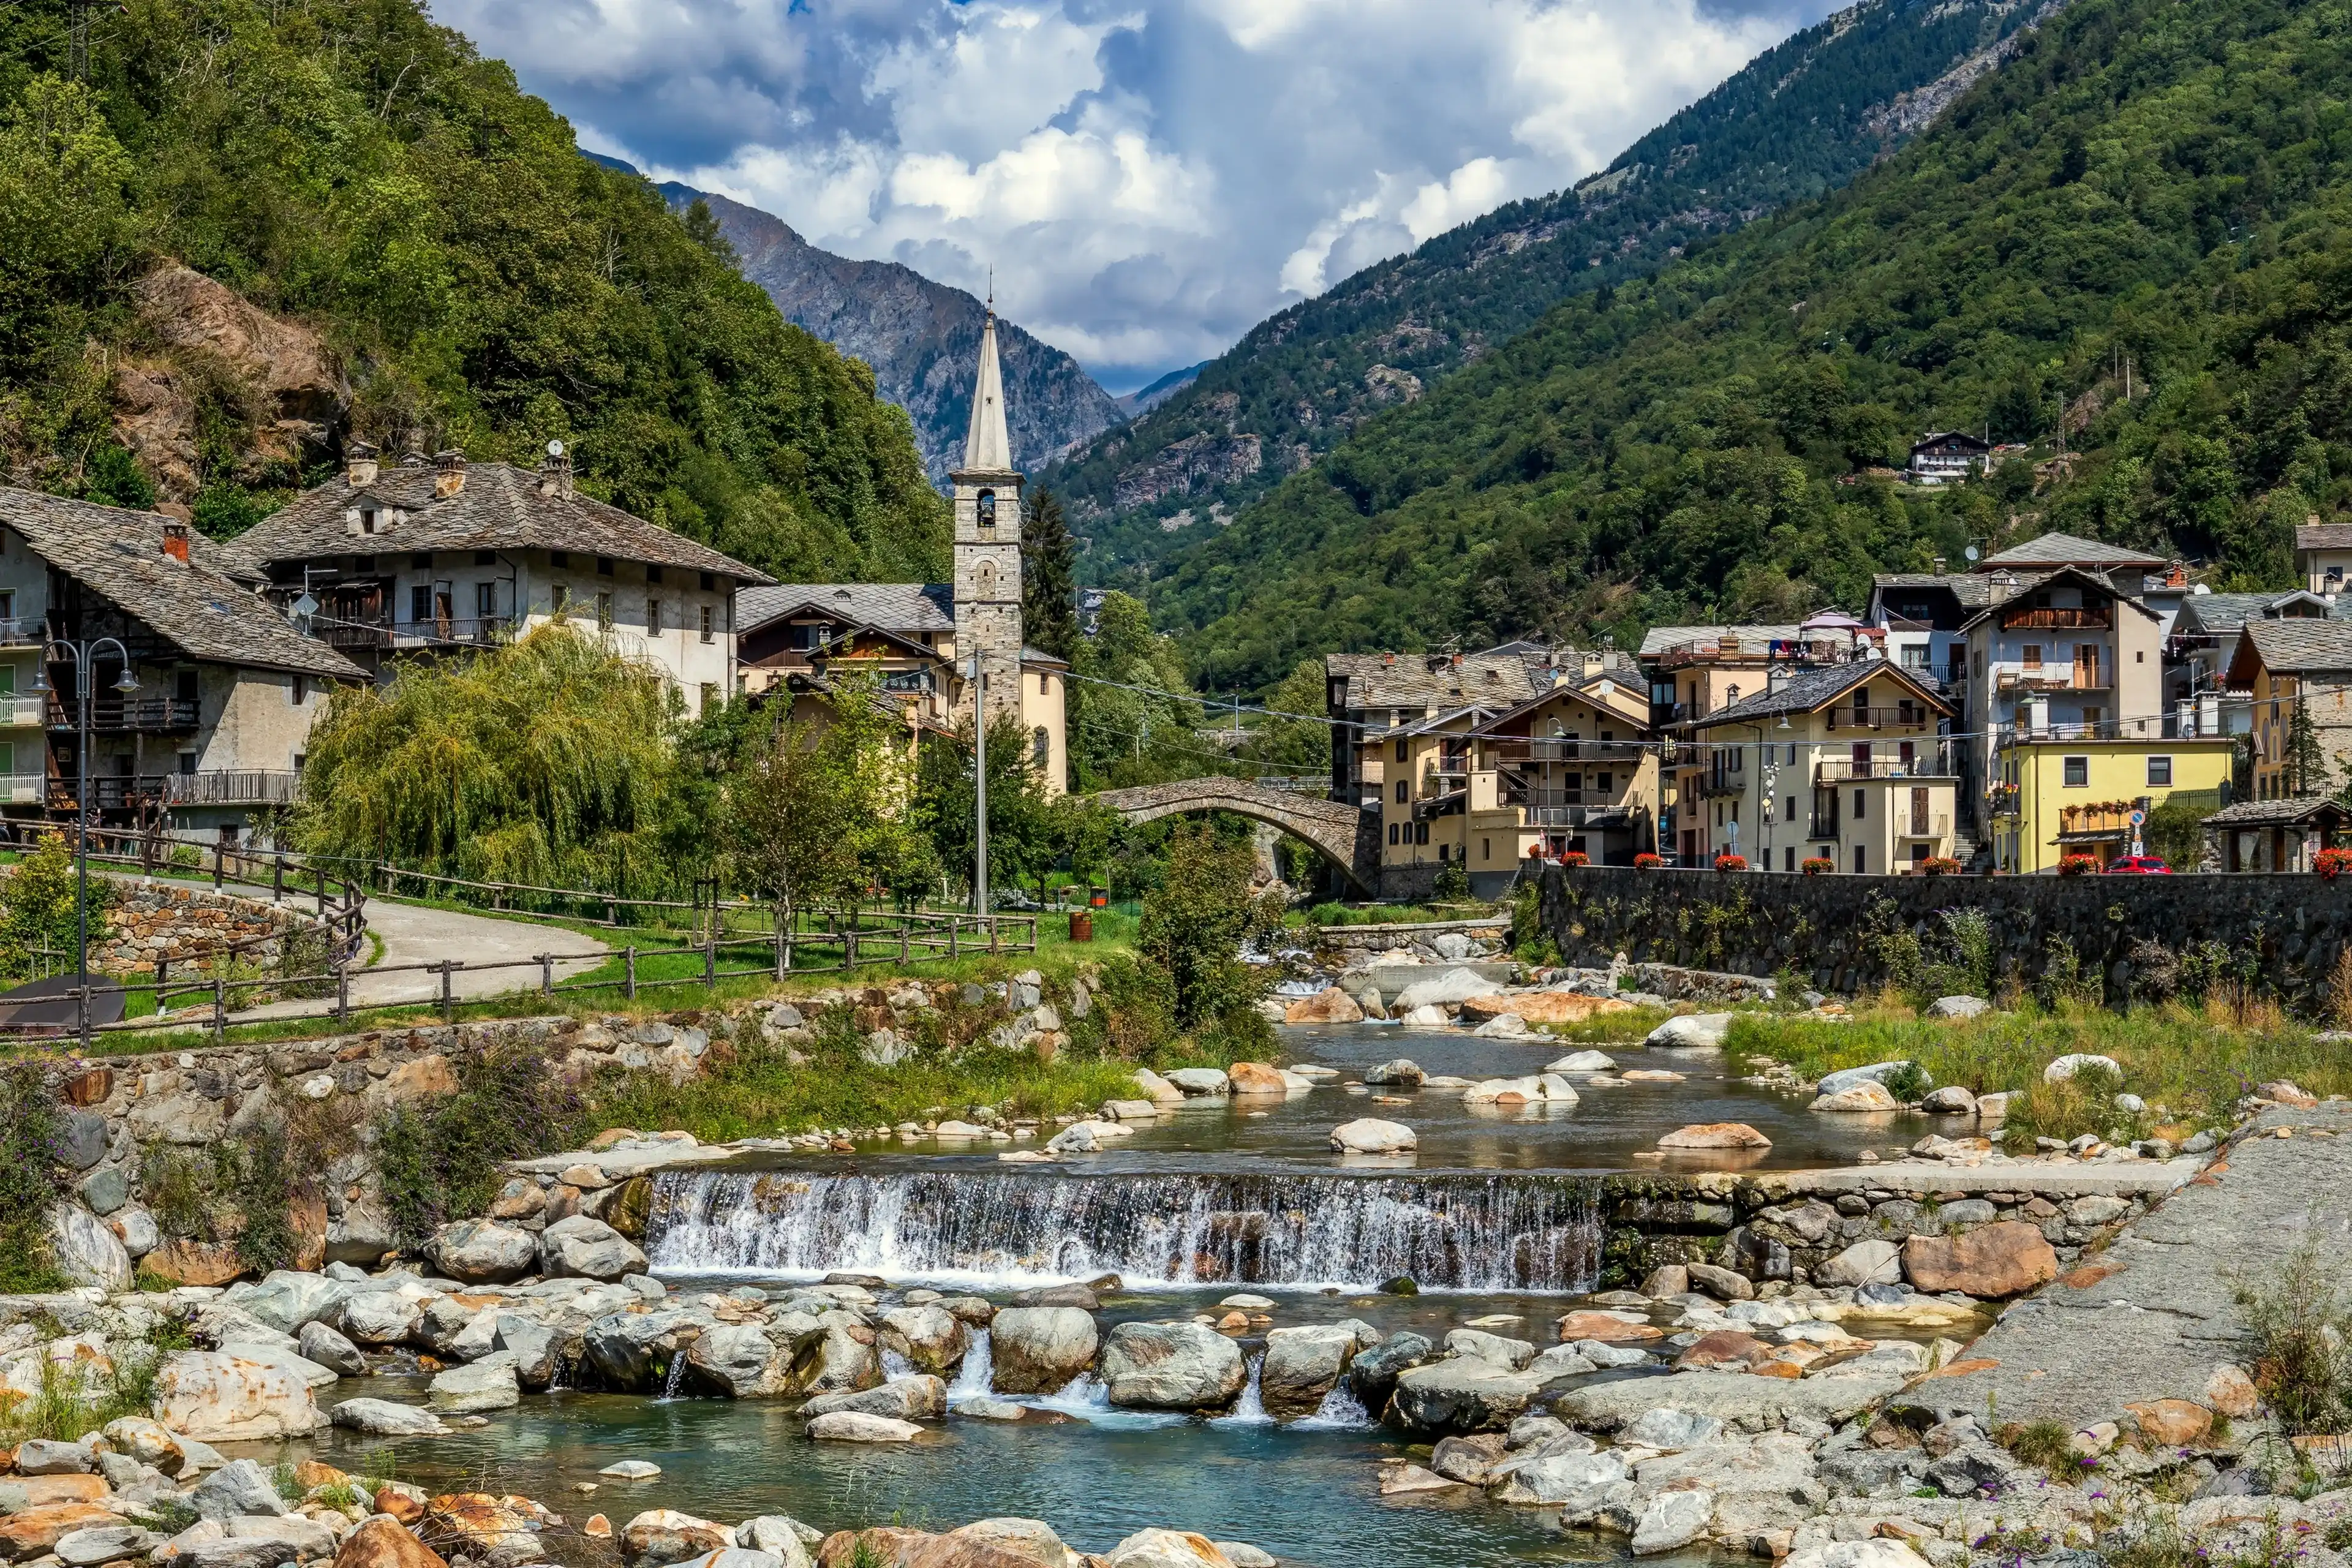 Best Aosta hotels. Cheap hotels in Aosta, Italy